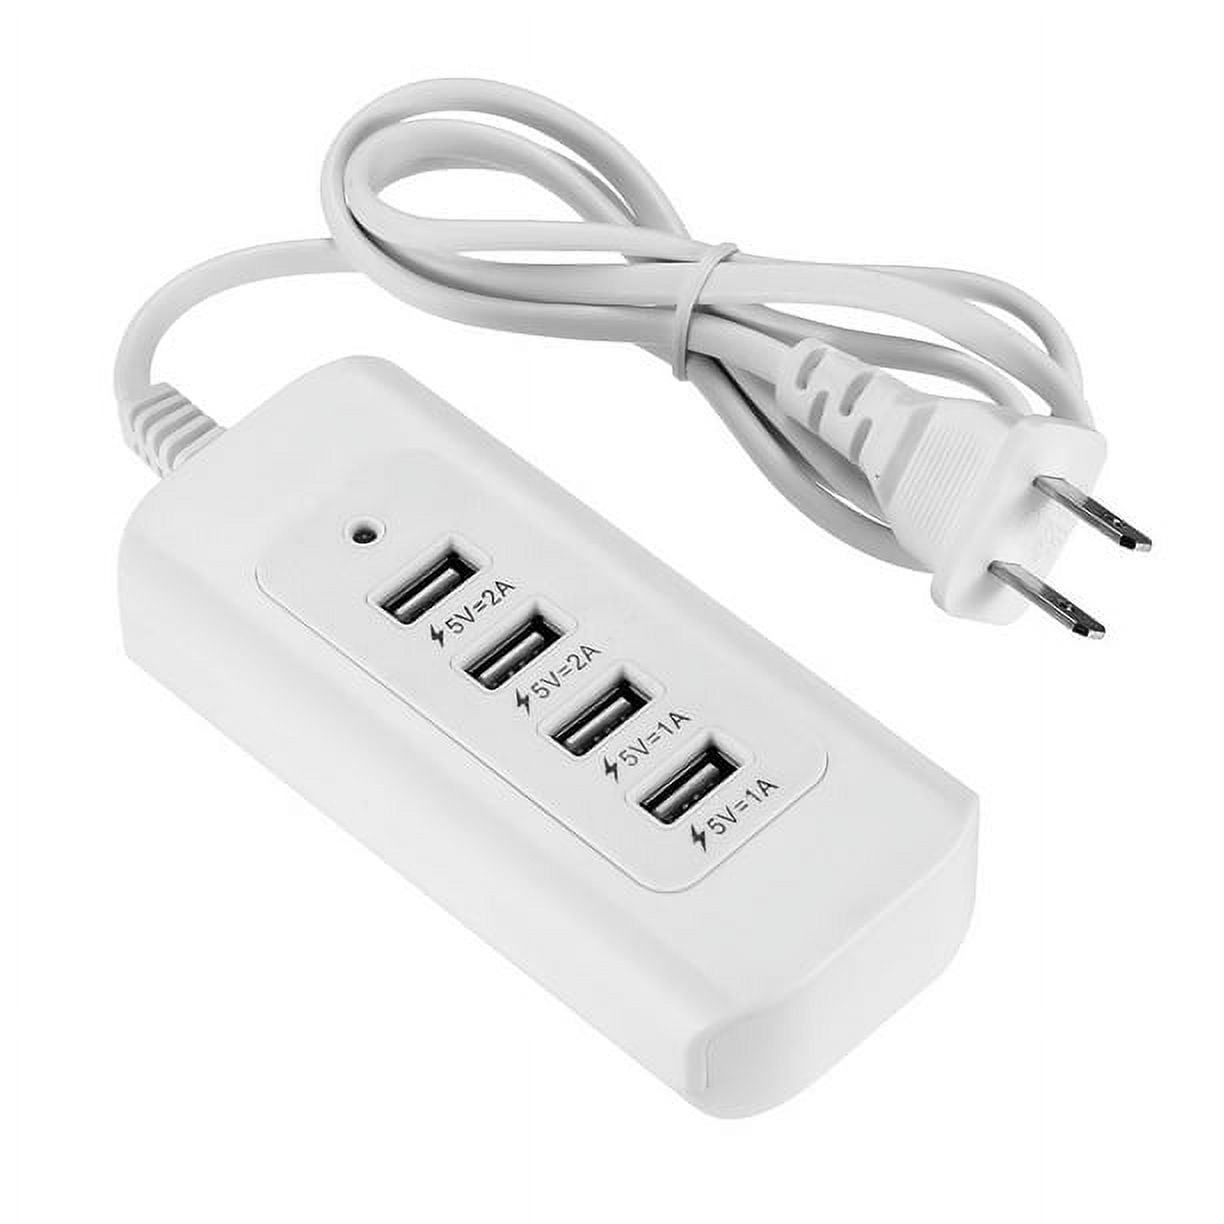 General Travelocity Platinum Series 4-Port USB Hub Charger - White